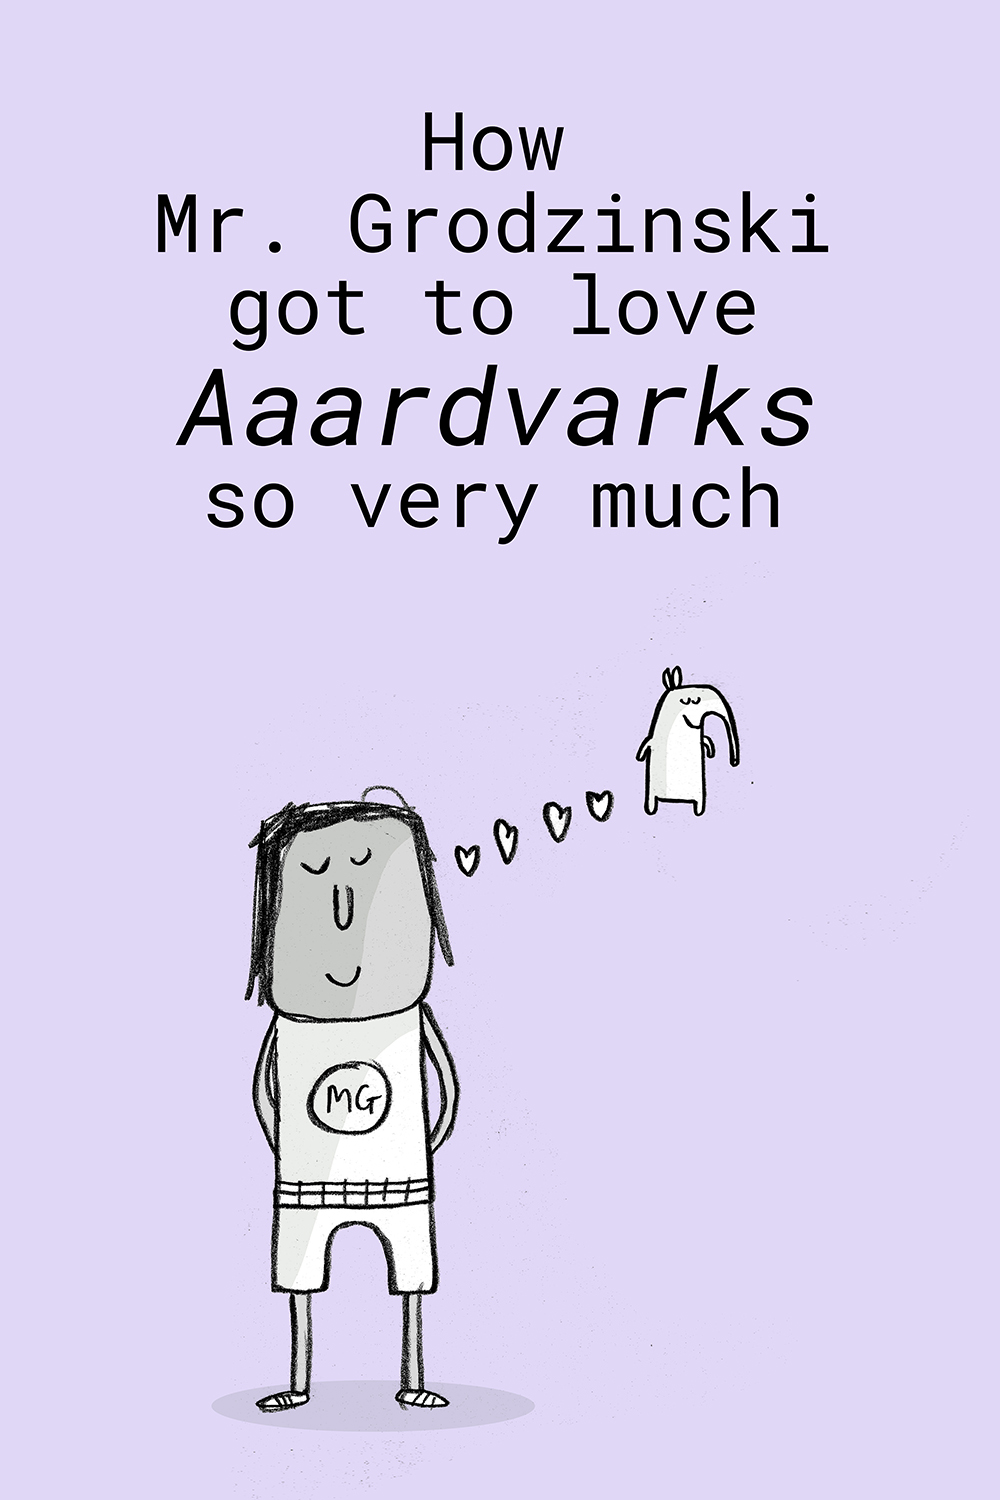 How Mr. Grodzinski got to love Aardvarks so very much